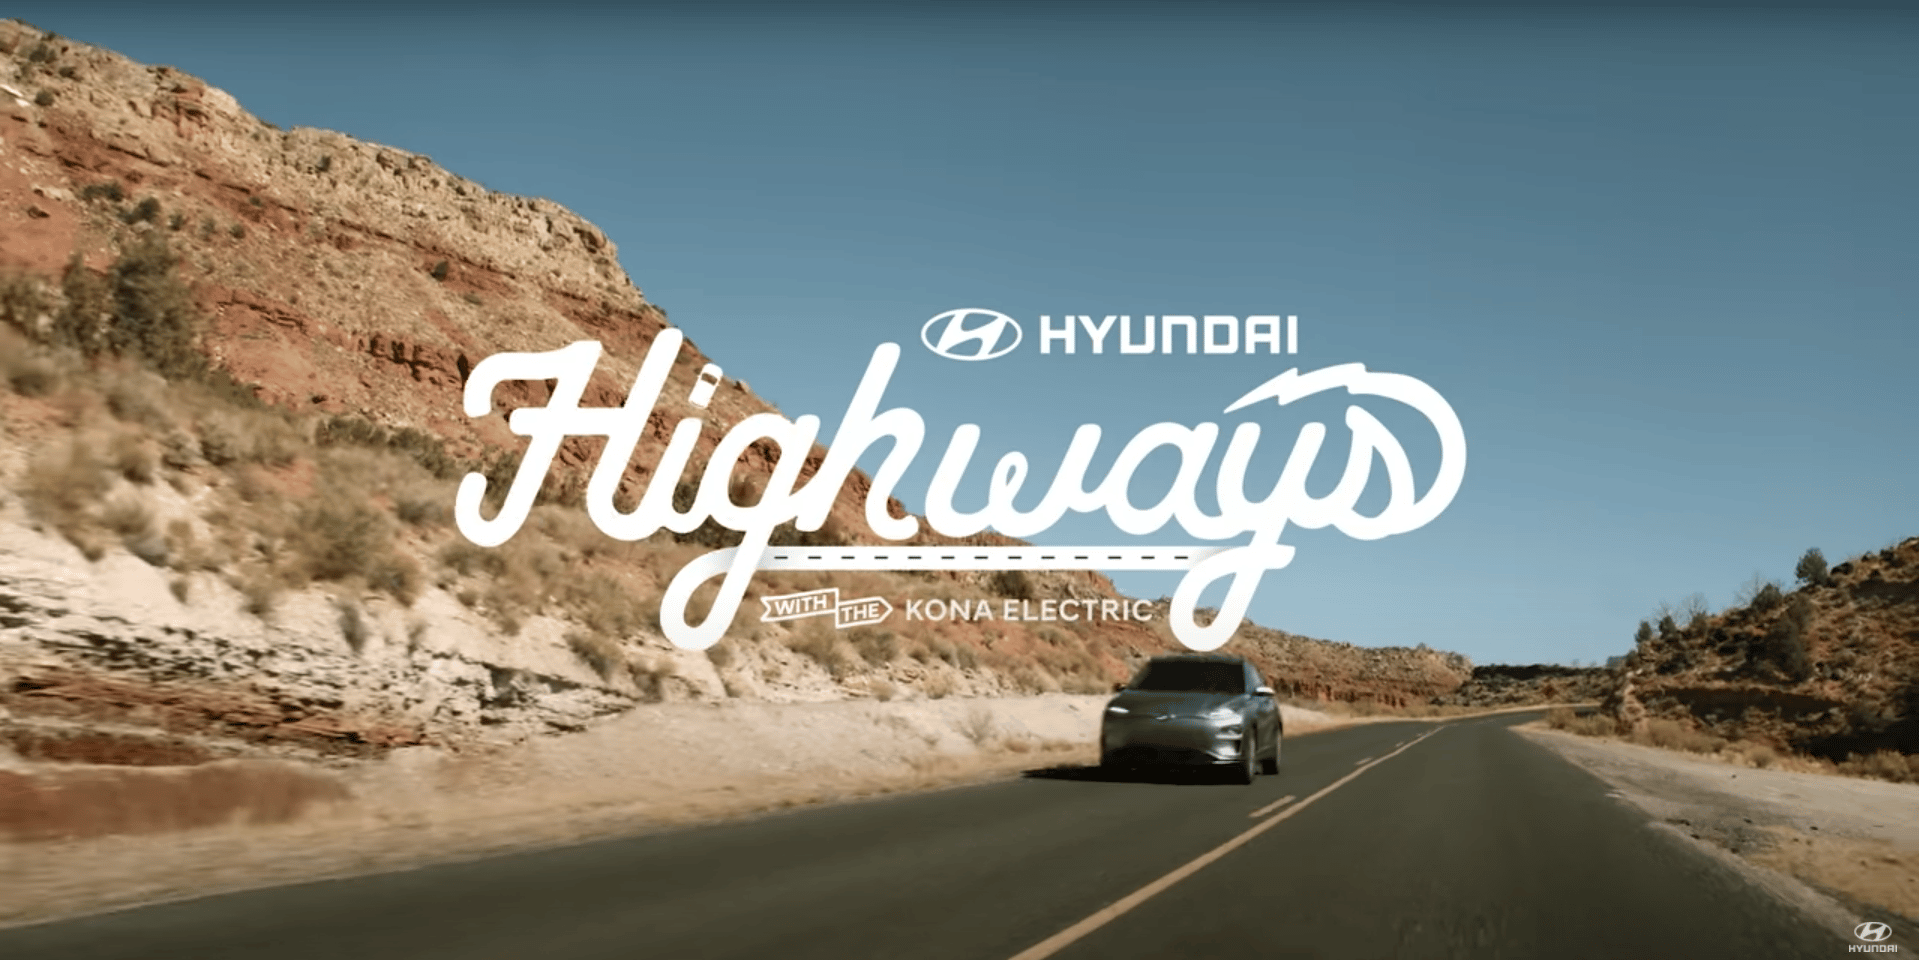 Hyundai Highways series on YouTube